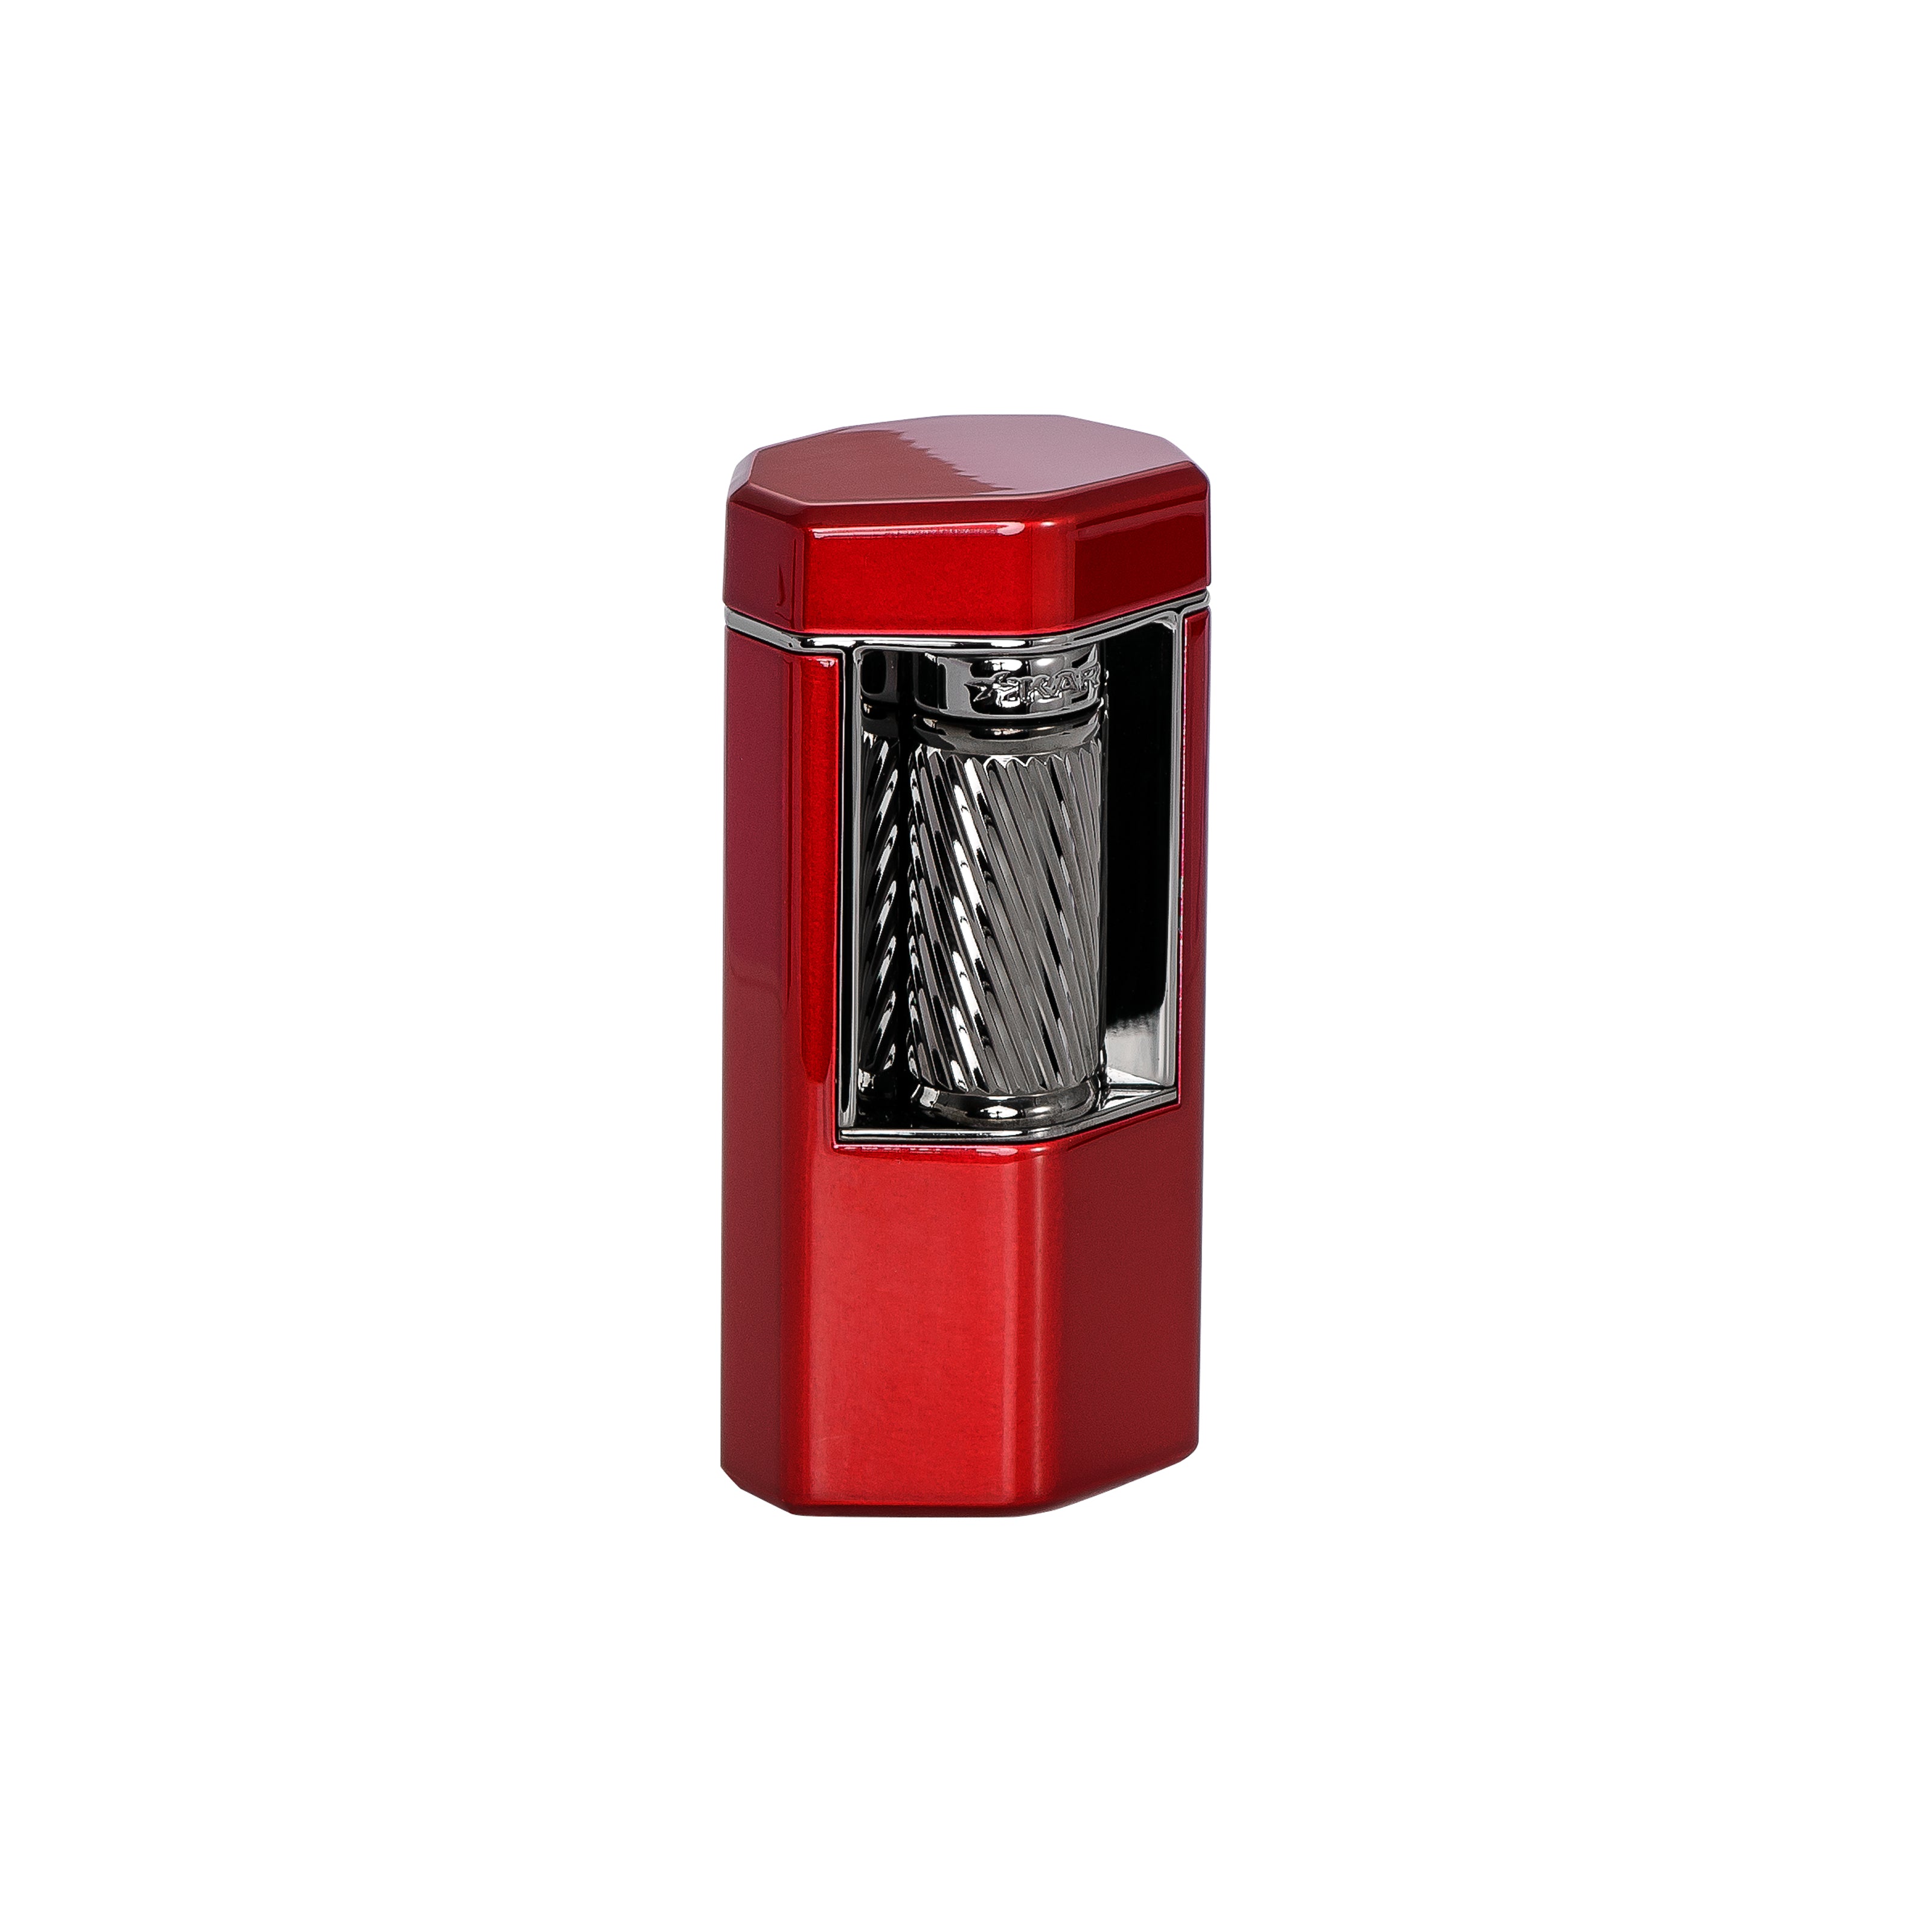 XIKAR® Meridian Triple Soft-flame Lighter